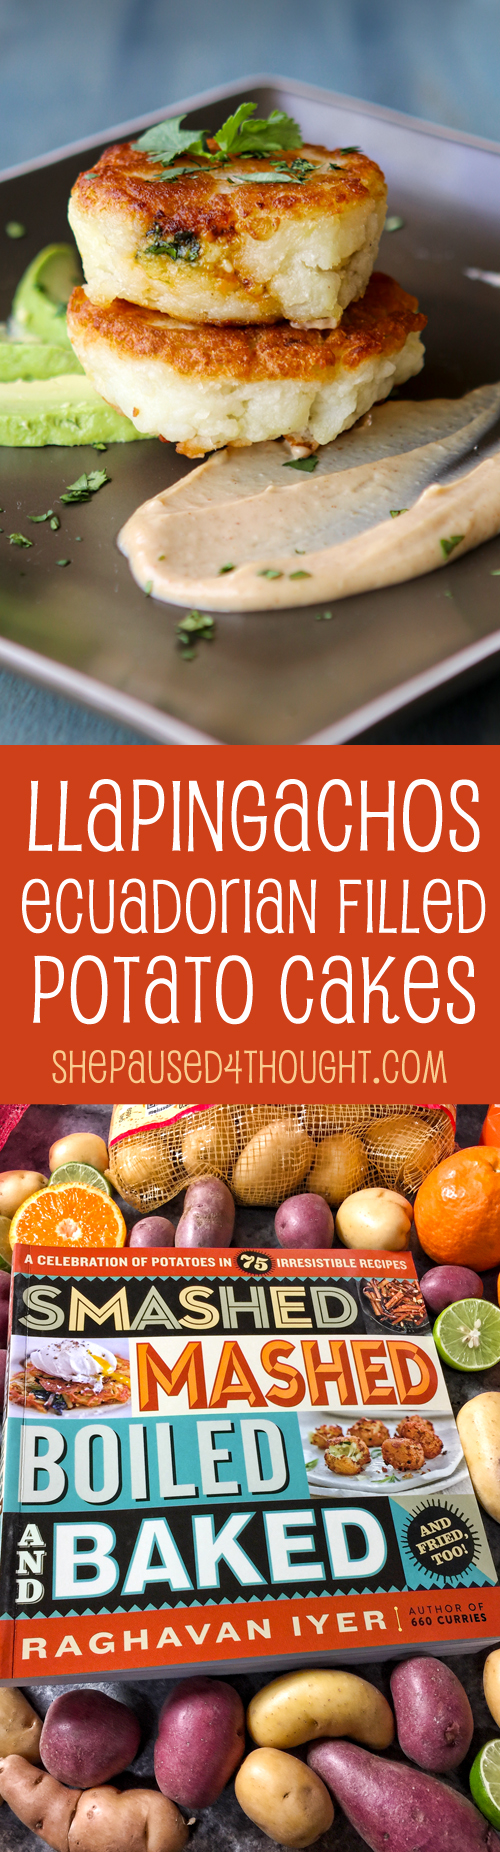 Llapingachos-Ecuadorian filled potato cakes | She Paused 4 Thought